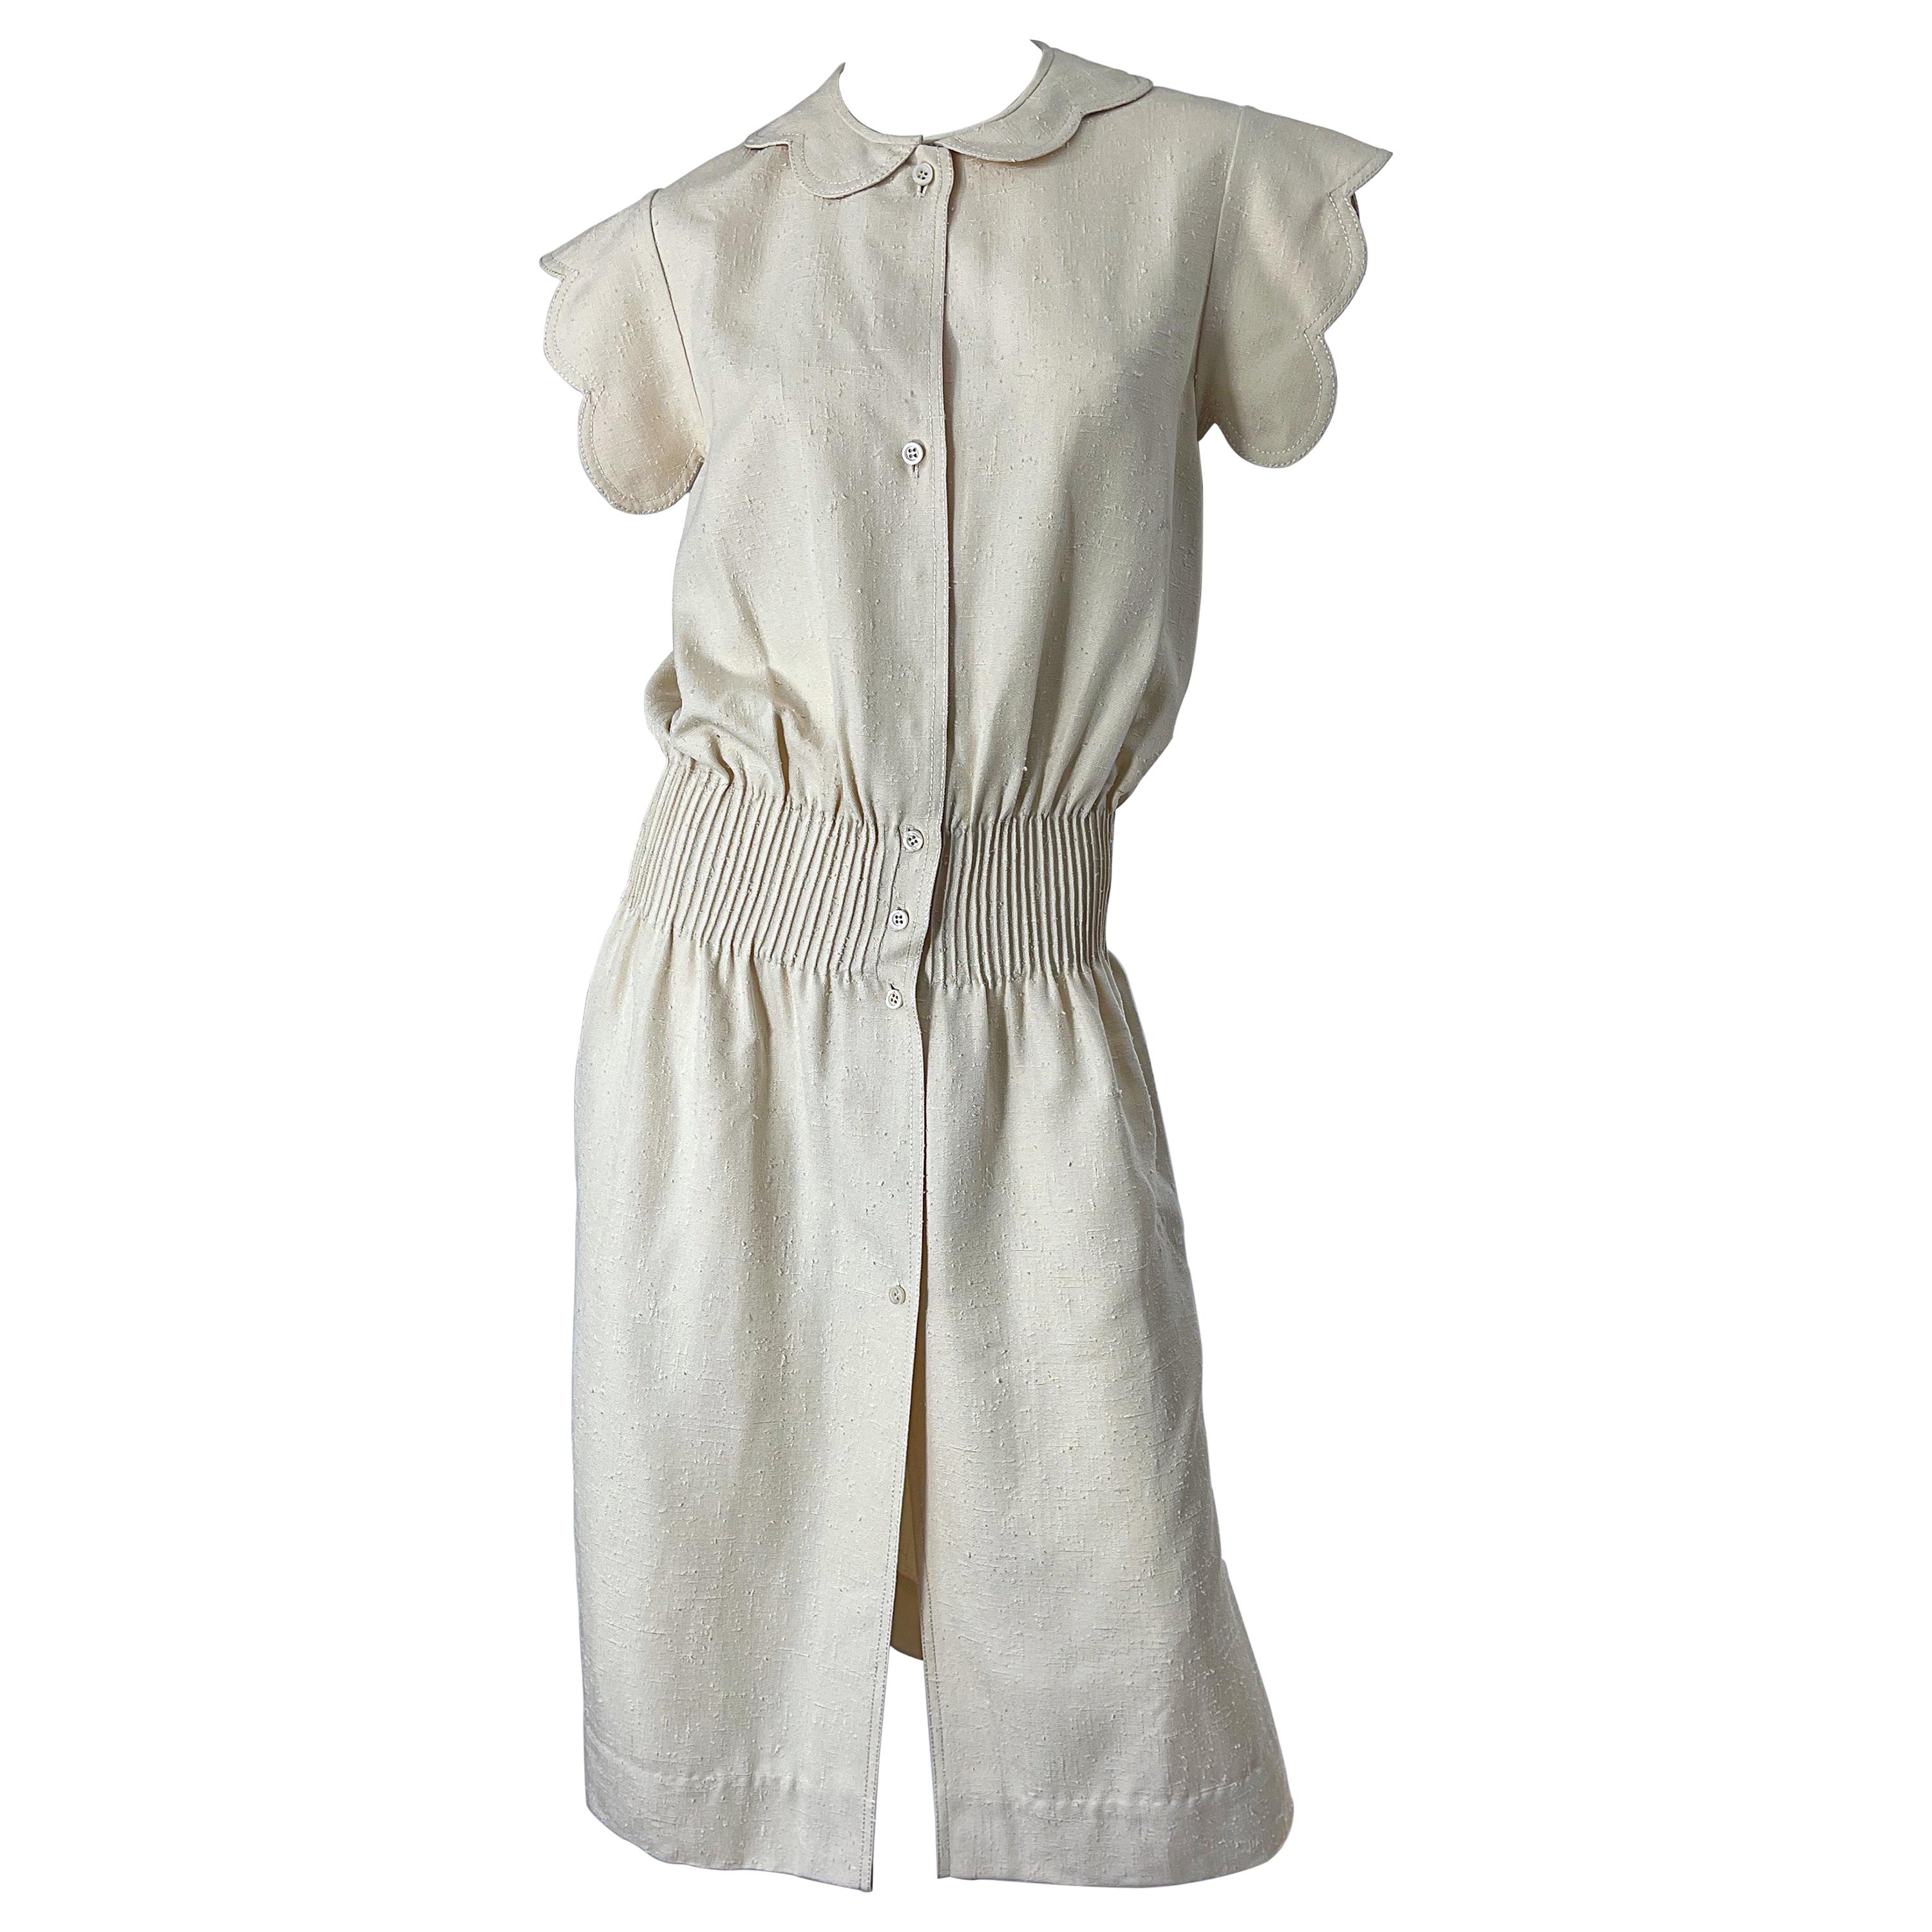 Robe crème mode vintage Avant Garde en lin blanc Galanos, années 1960